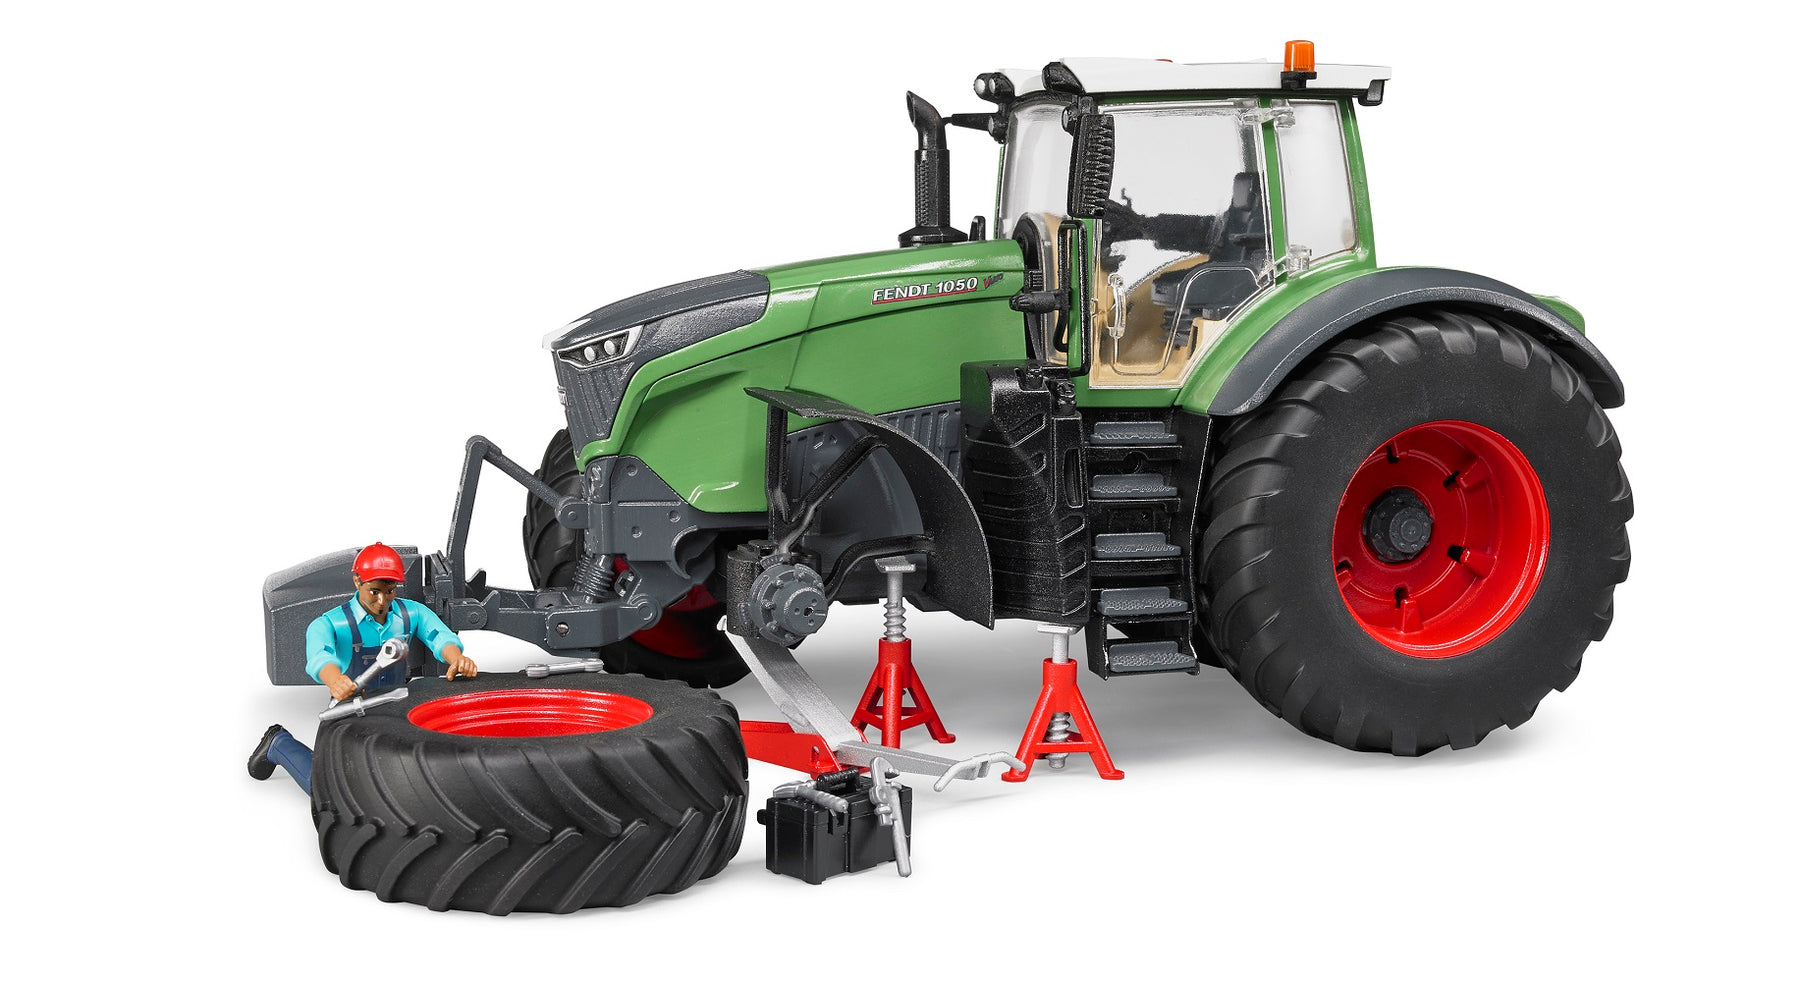 Bruder 04041 Fendt 1000 Tractor w/ Repair Accessories 18.10.10 – Bruder Toy Shop